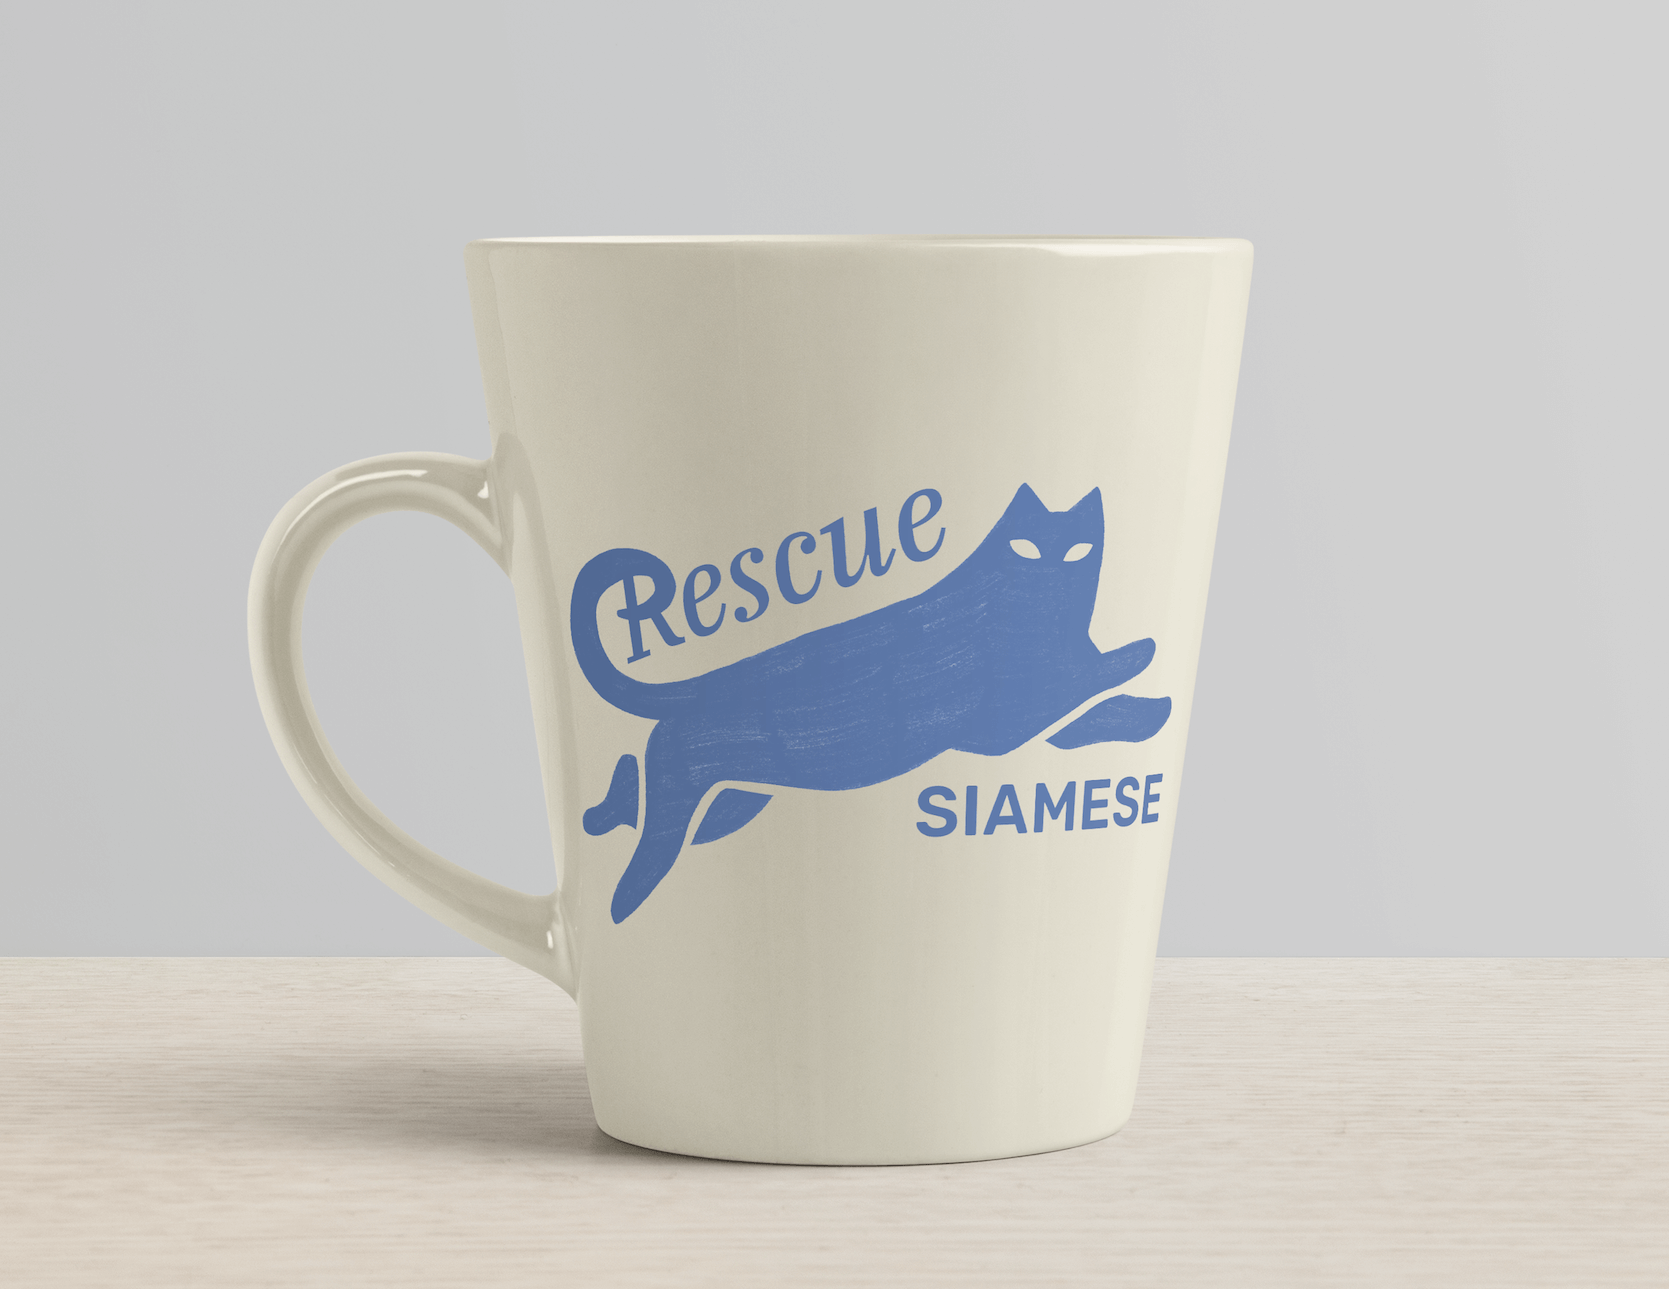 Image of a mug featuring the Rescue Siamese logo